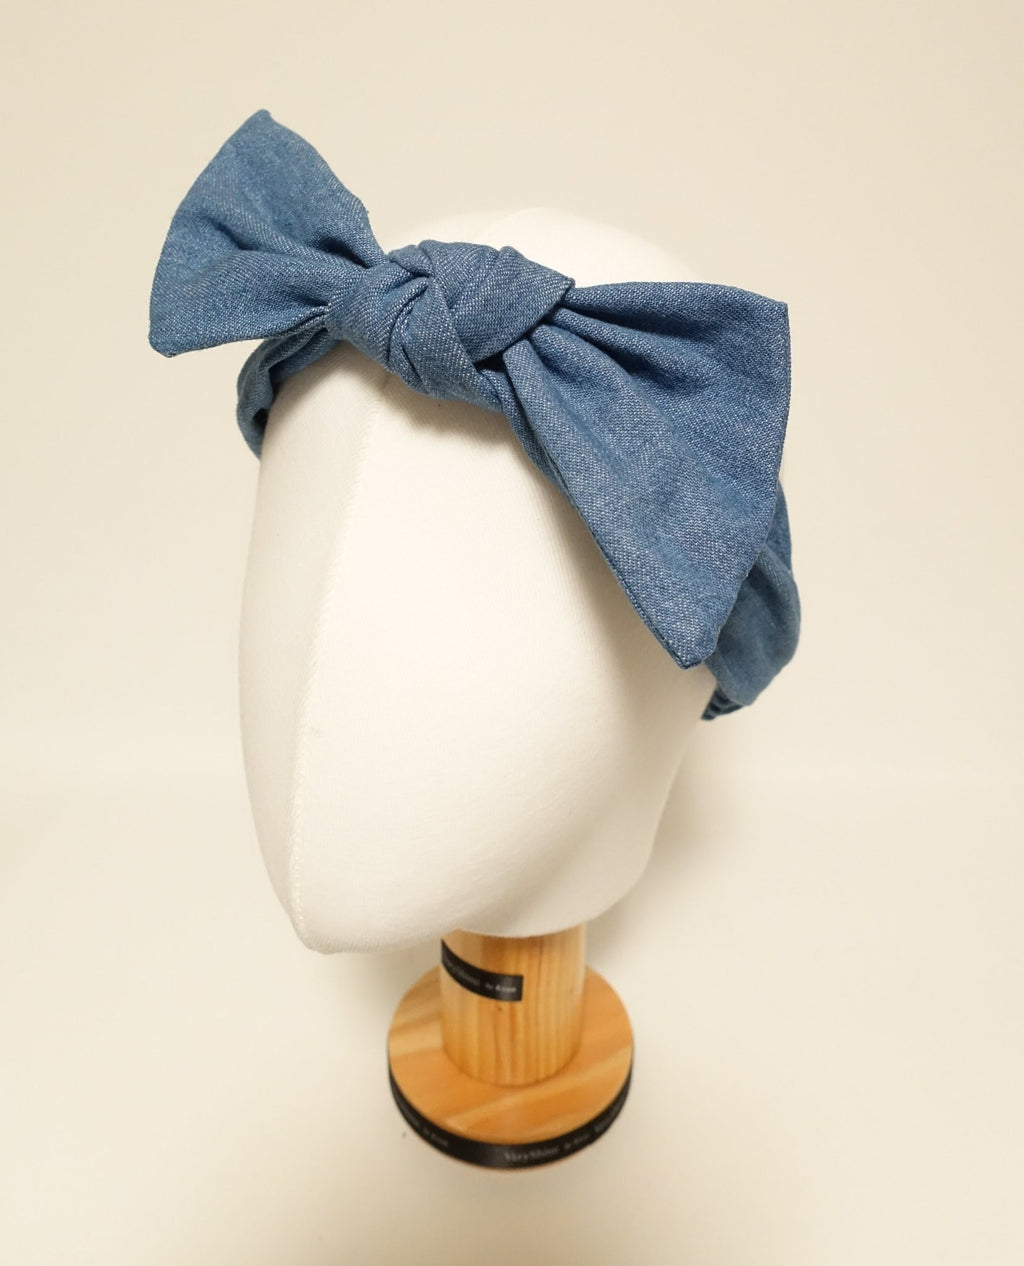 veryshine.com hairband/headband Blue Denim Jean fabric Bow Knot Elastic Fashion Headband for Women